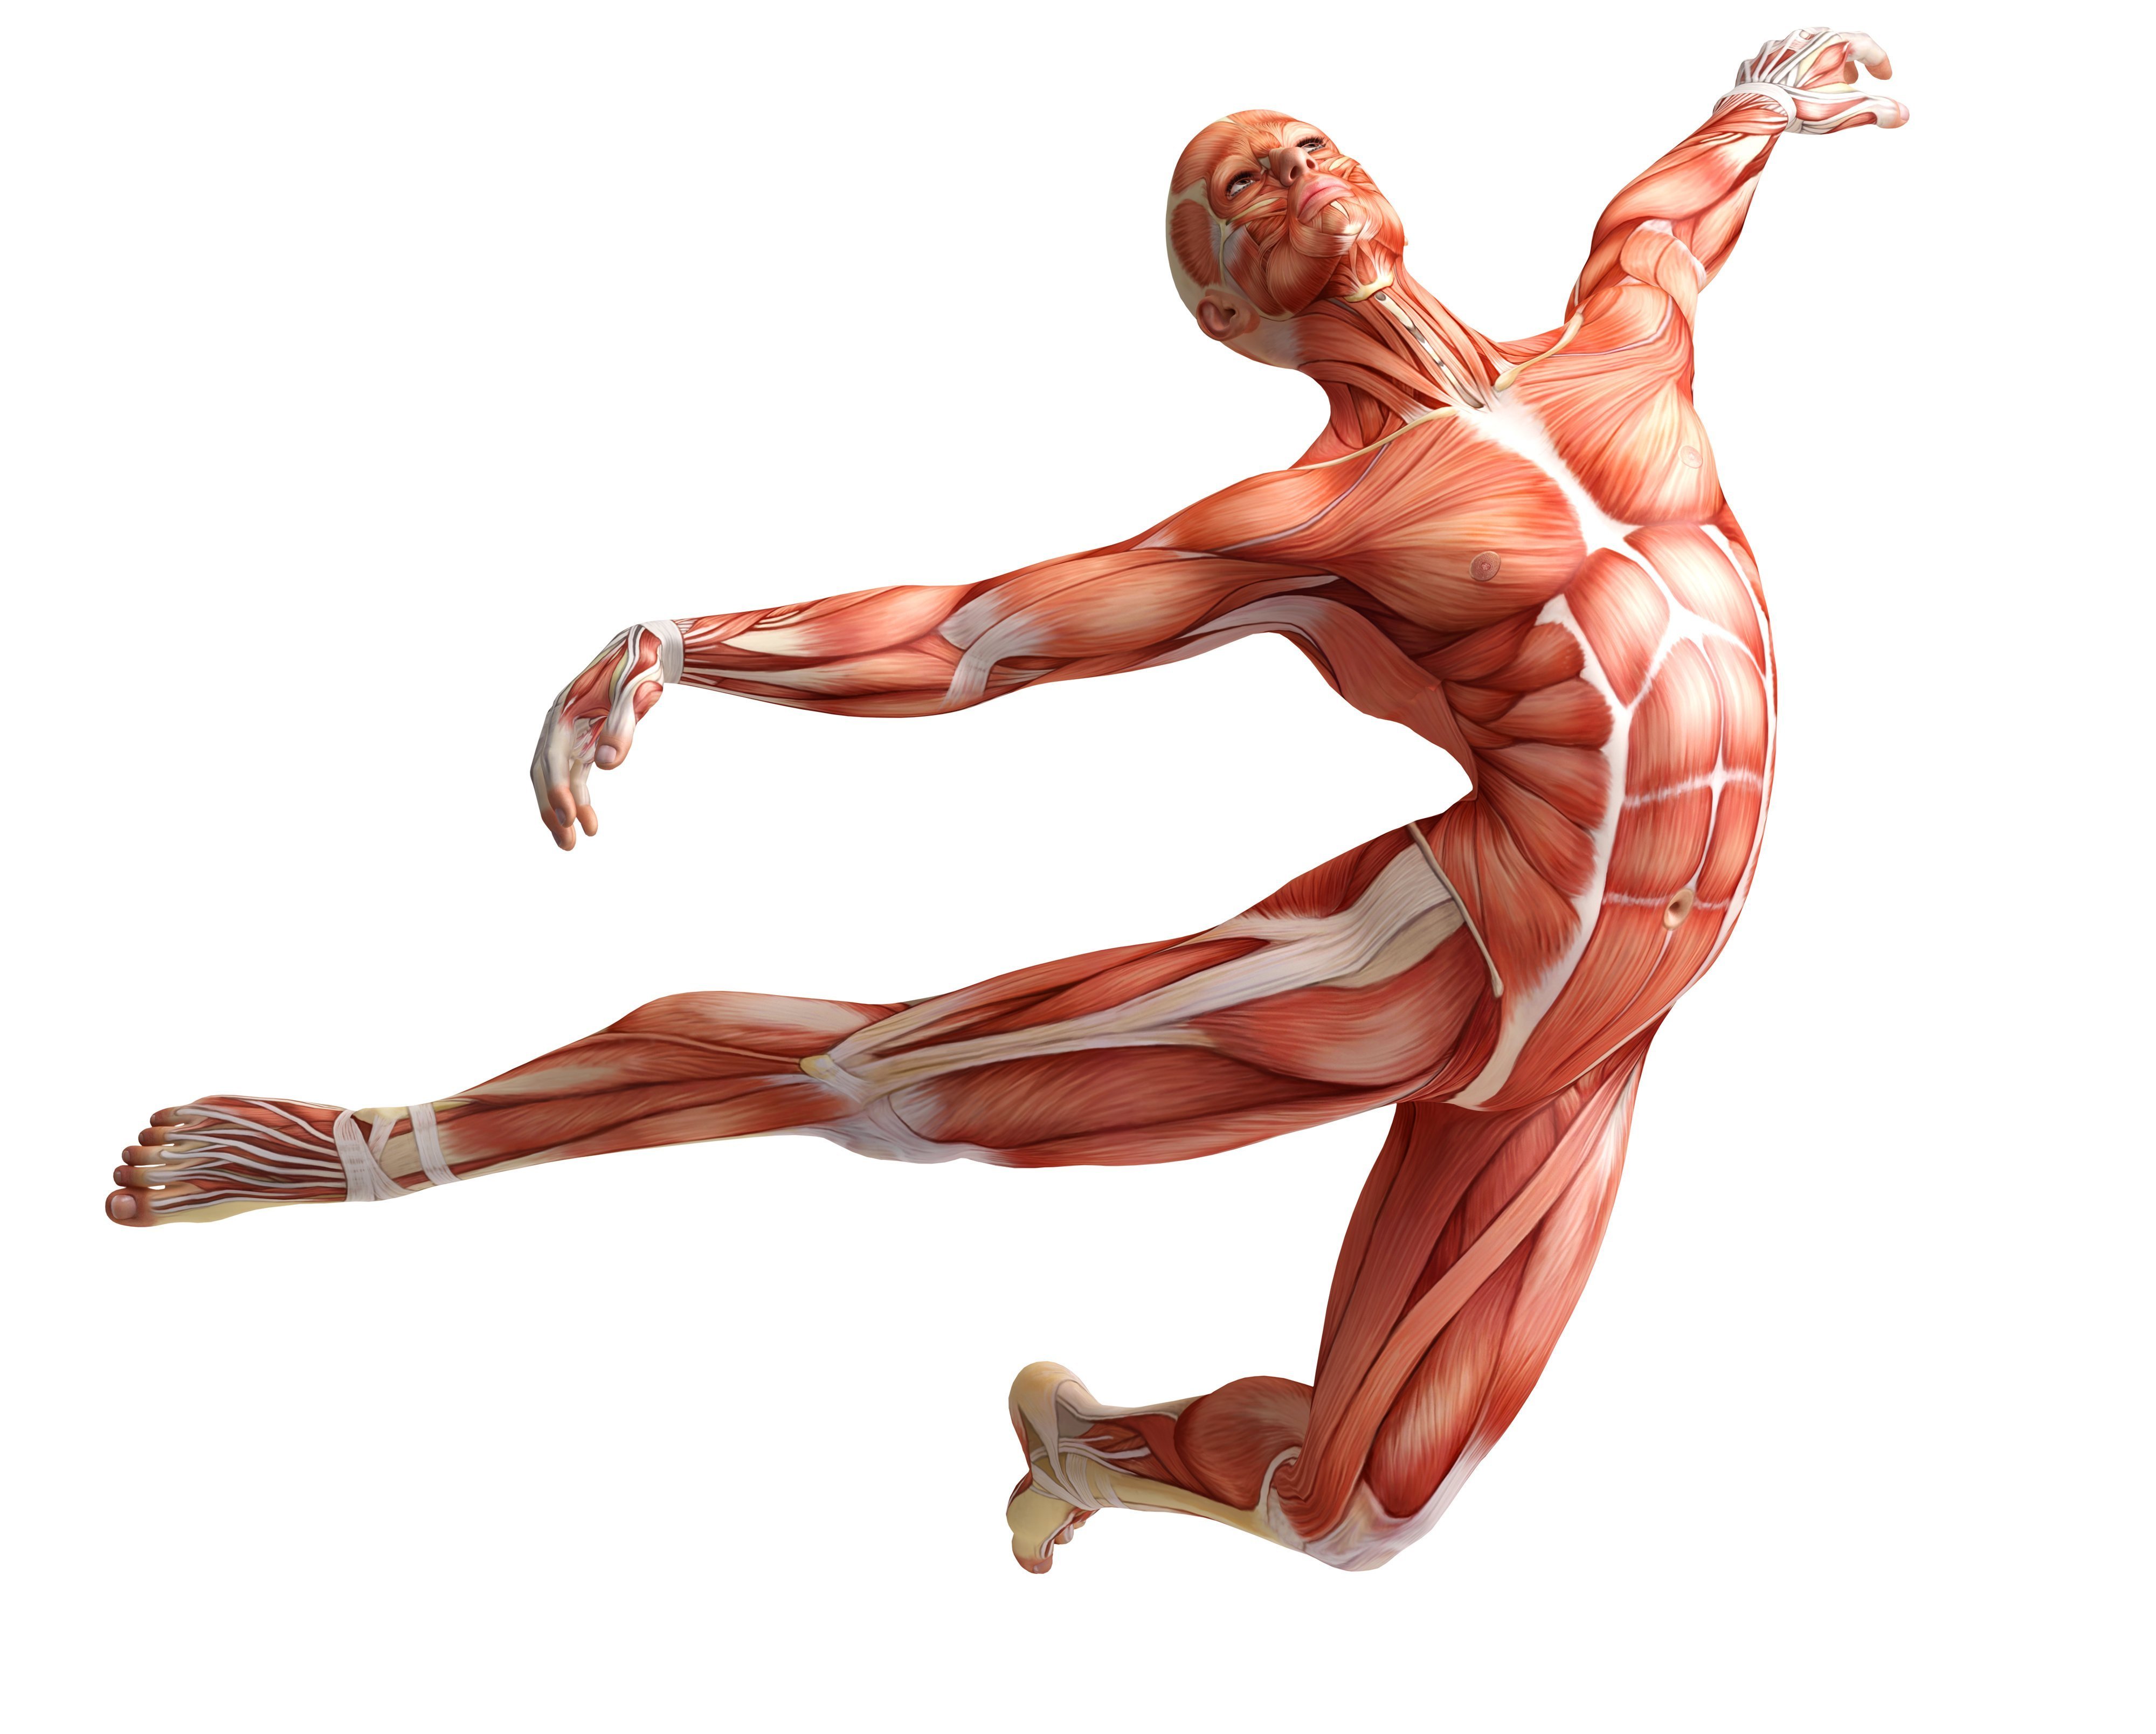 Мышцы картинка. Мышечная система человека. Мышечная система человека анатомия. Фасции тела человека анатомия. Фасция мышцы анатомия.